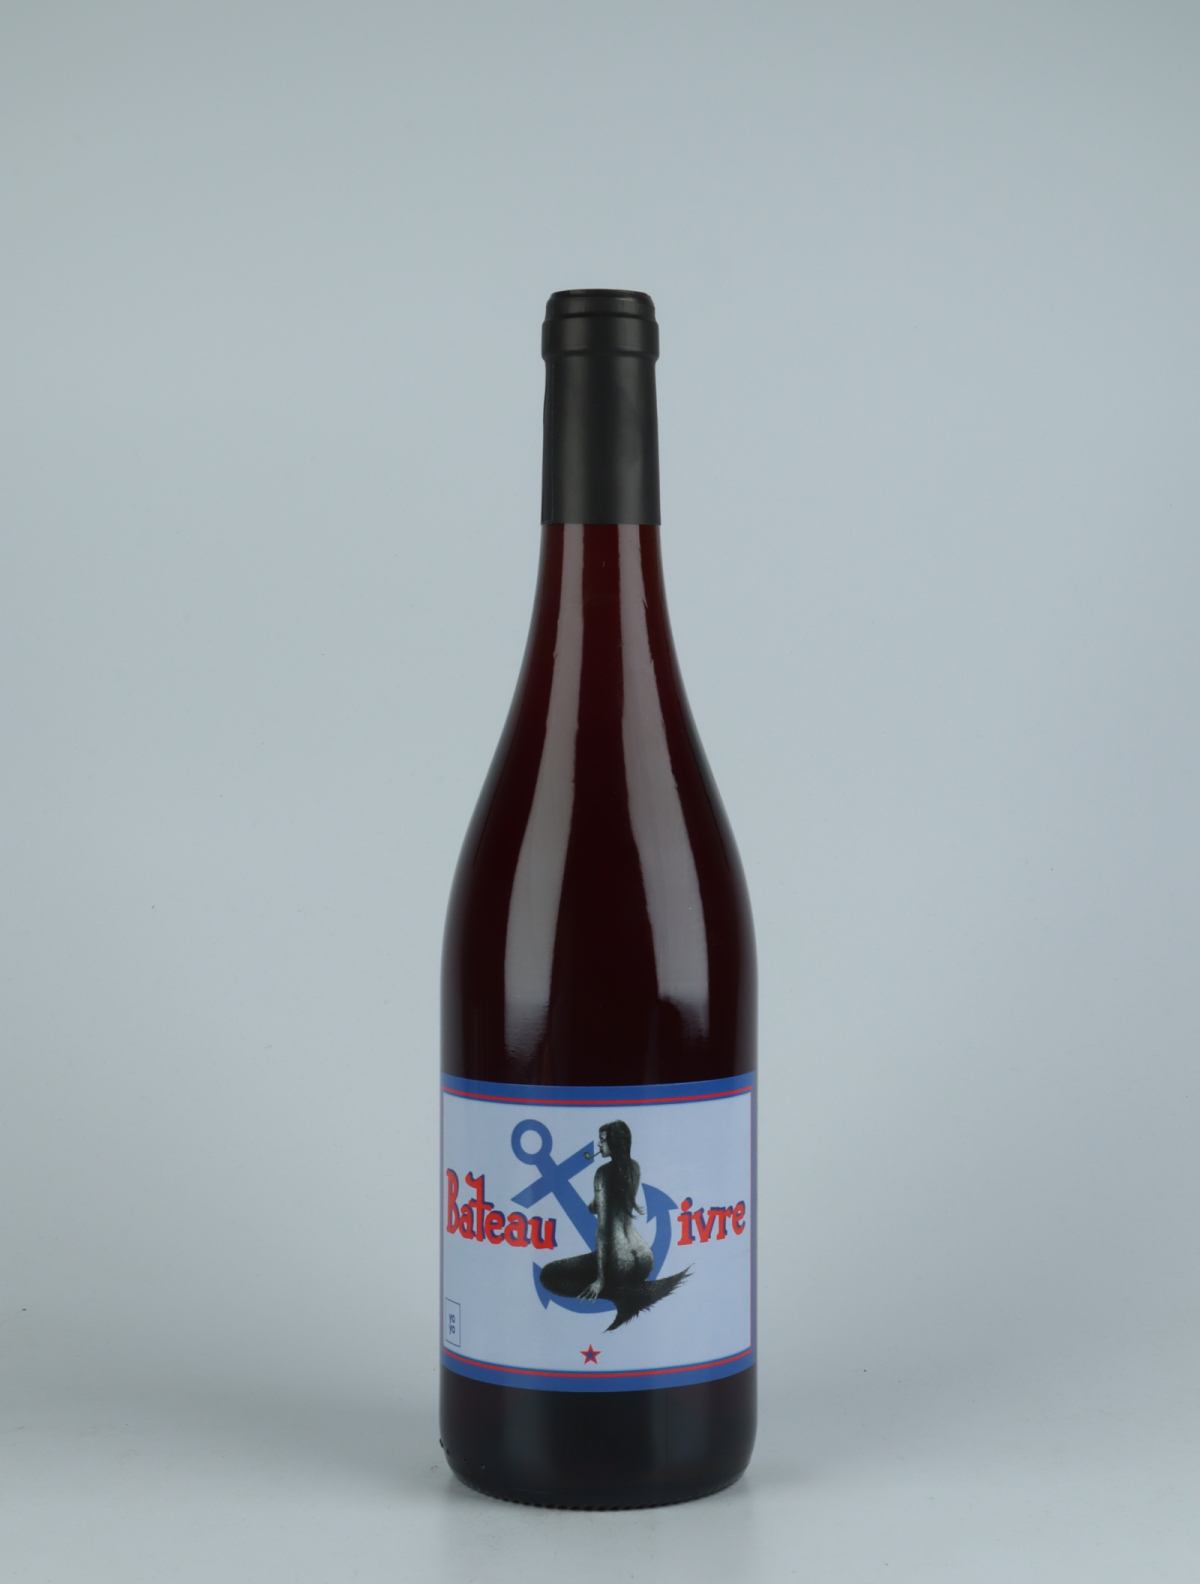 En flaske 2021 Bateau Ivre Primeur Rødvin fra Domaine Yoyo, Rousillon i Frankrig